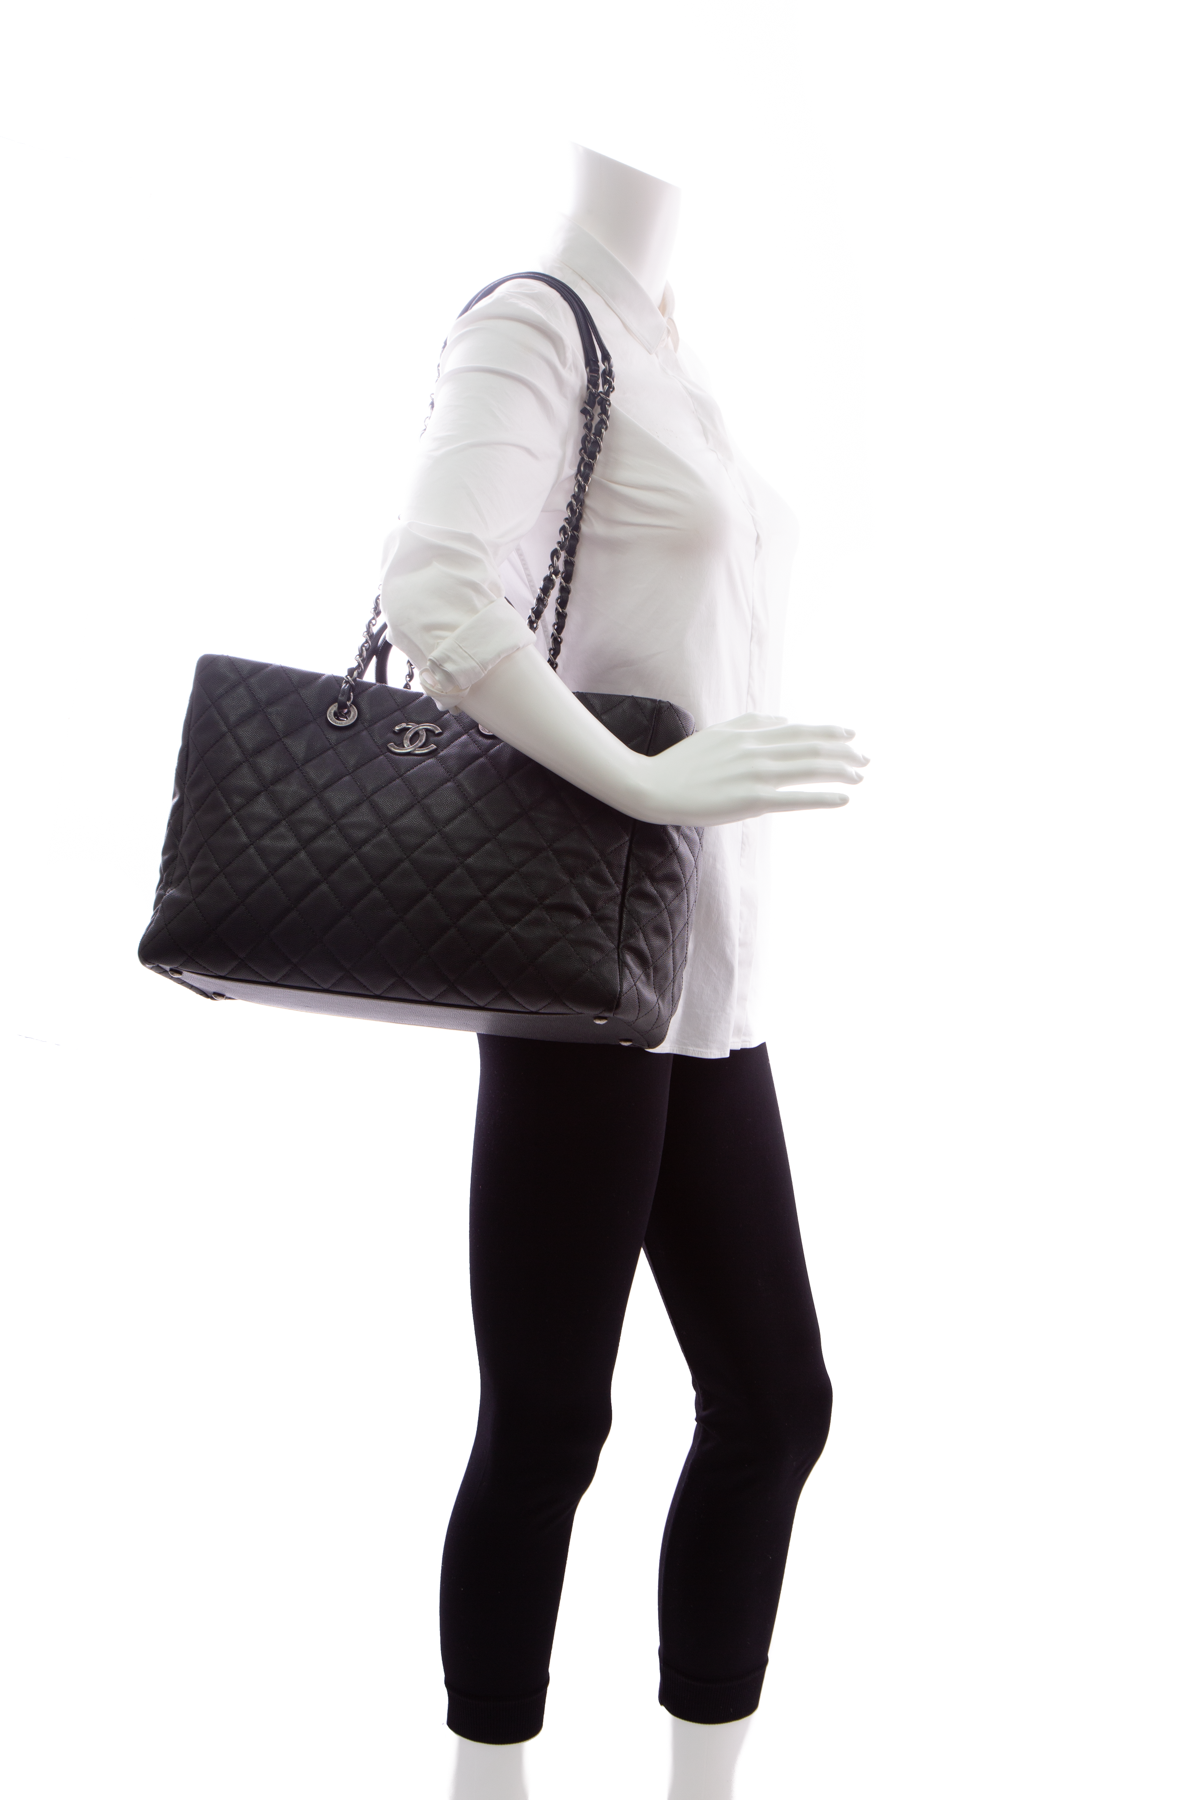 Chanel Coco Allure Large Tote Bag